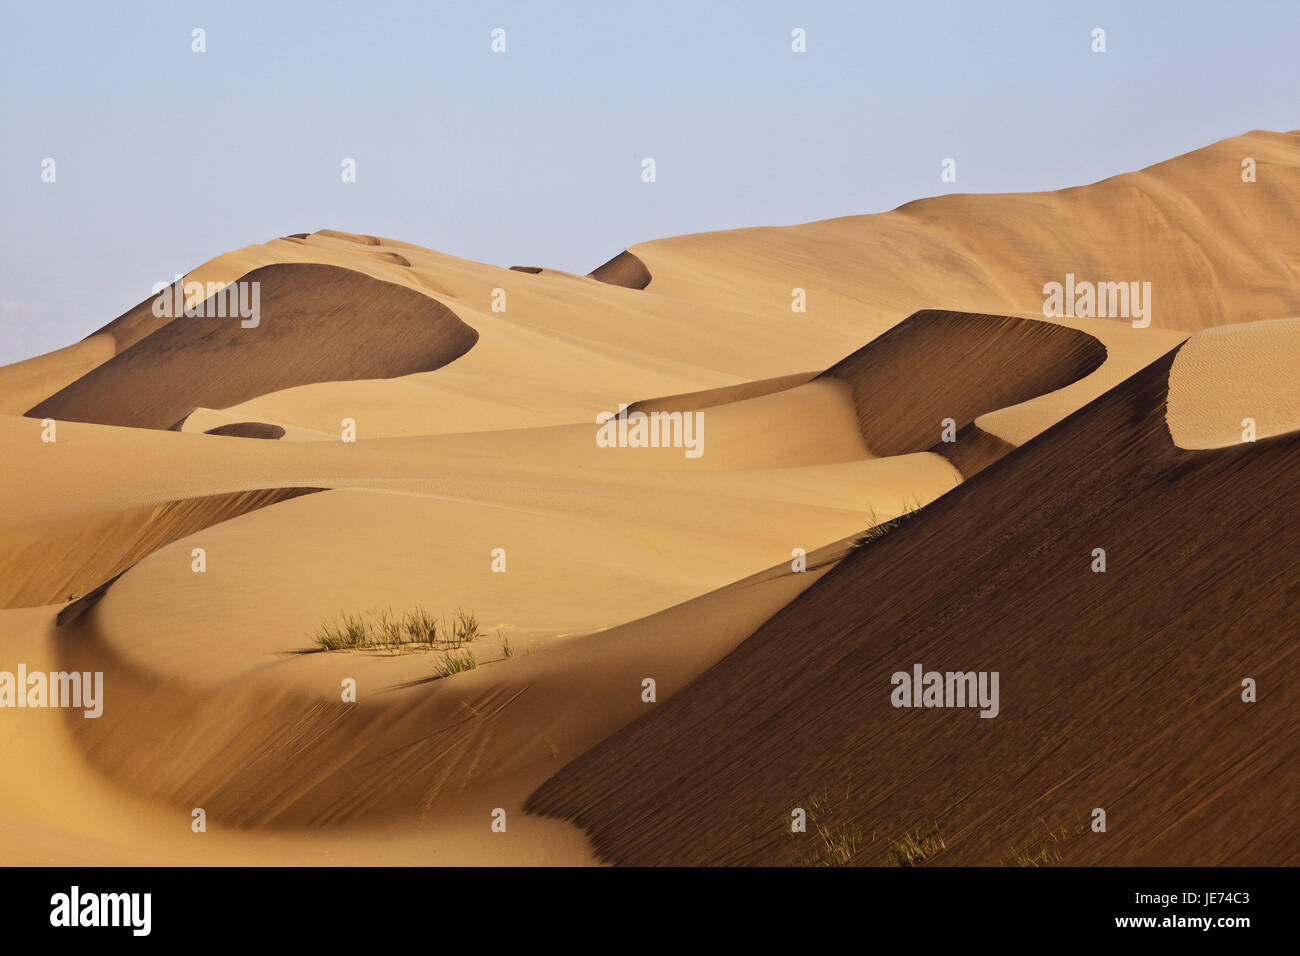 Africa, Namibia, Erongo region, Namib Naukluft park, dune area, South-West Africa, Namib, Namib Naukluft park, Rooibank, Walvis-Bay, desert, Sand desert, dunes, Sandrippel, Sand waves, Sand sea, formed in wind, lonely, splendidly, impressively, untouched, dry, life-hostilely, vertical format, sunshine, shade, Stock Photo